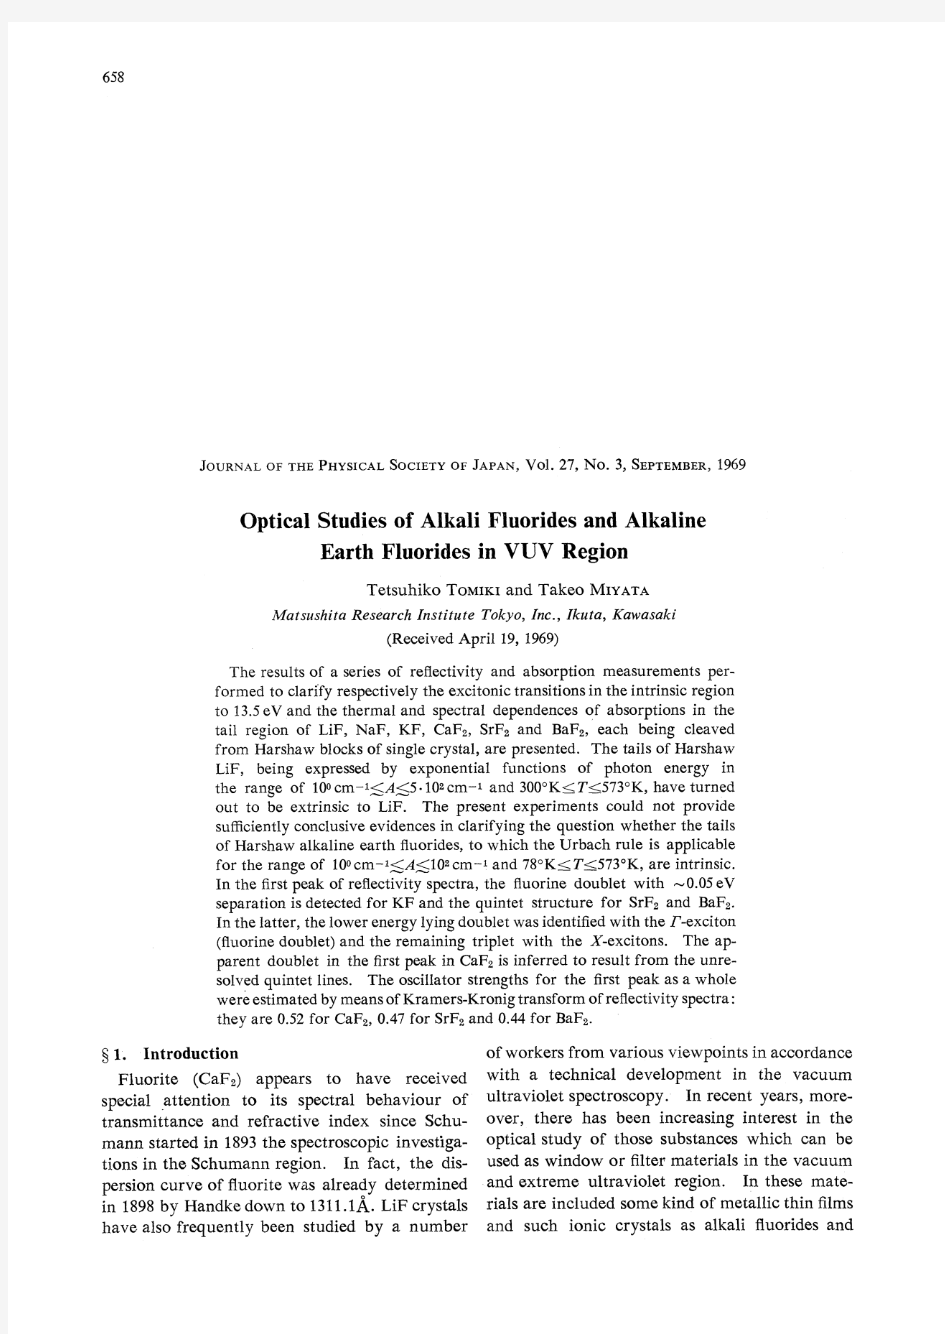 1969_Optical_studies_of_alkali_fluorides_and_alkaline_earth_fluorides_in_VUV_region